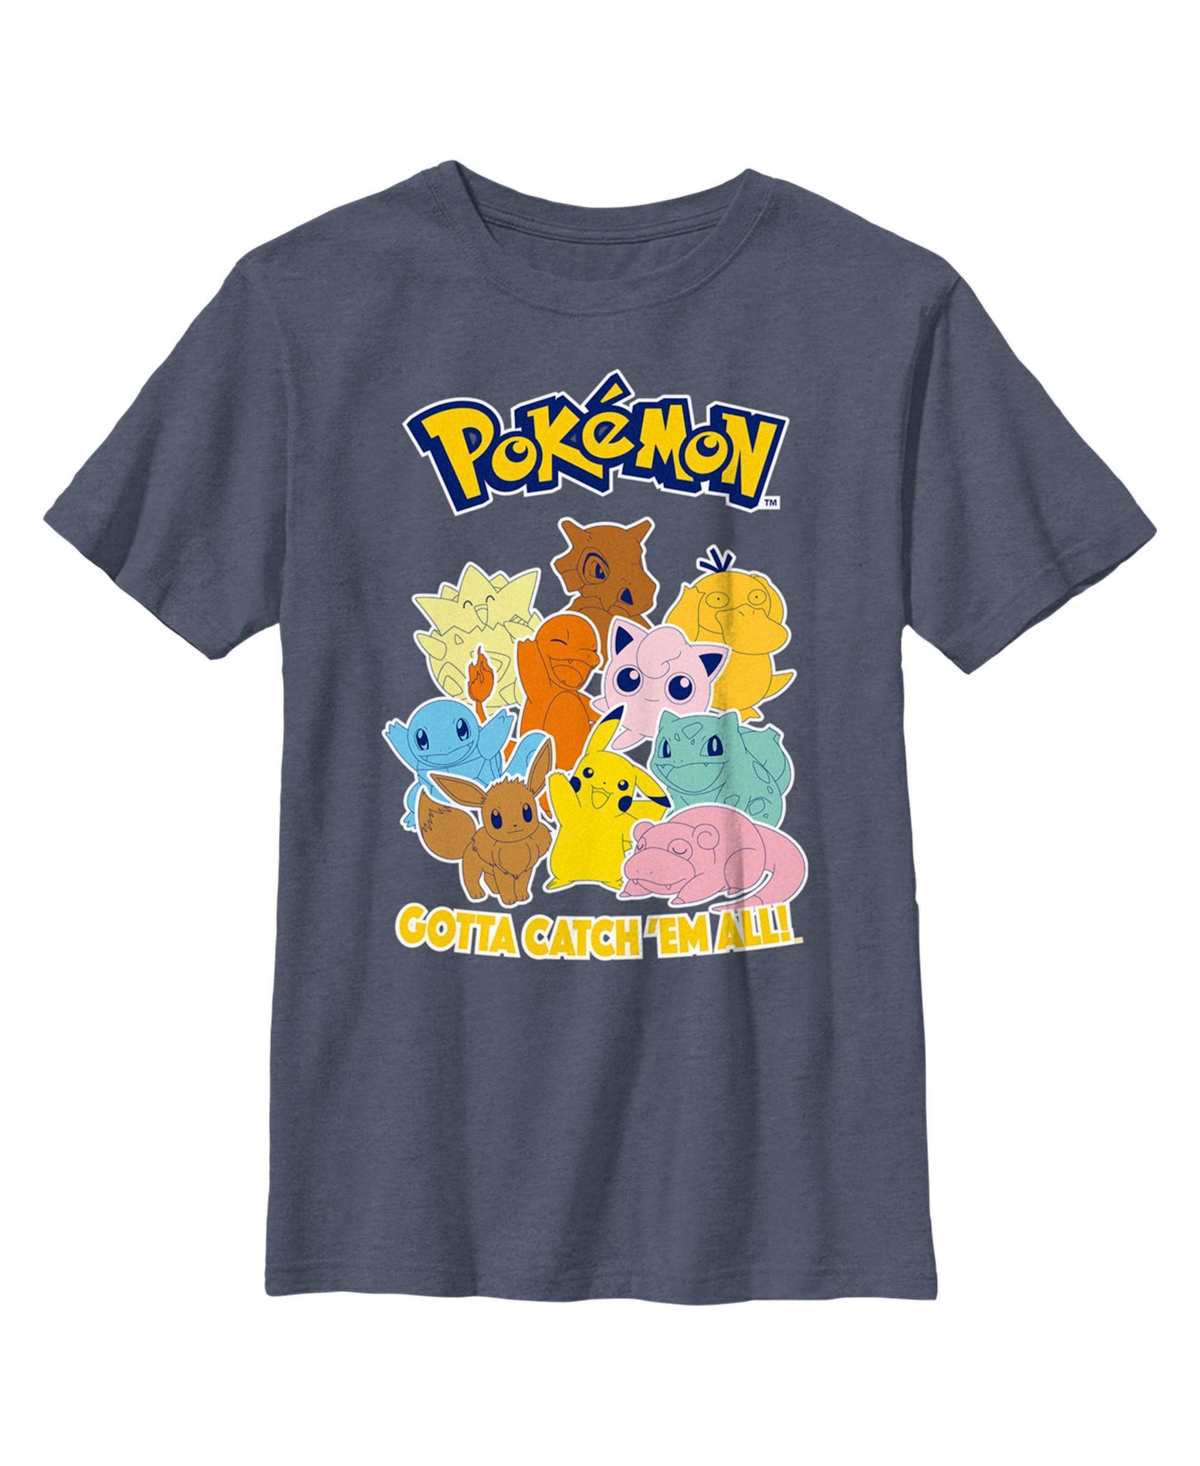 Nintendo Boy's Pokemon Gotta Catch 'em All Group Child T-shirt In Navy Blue Heather